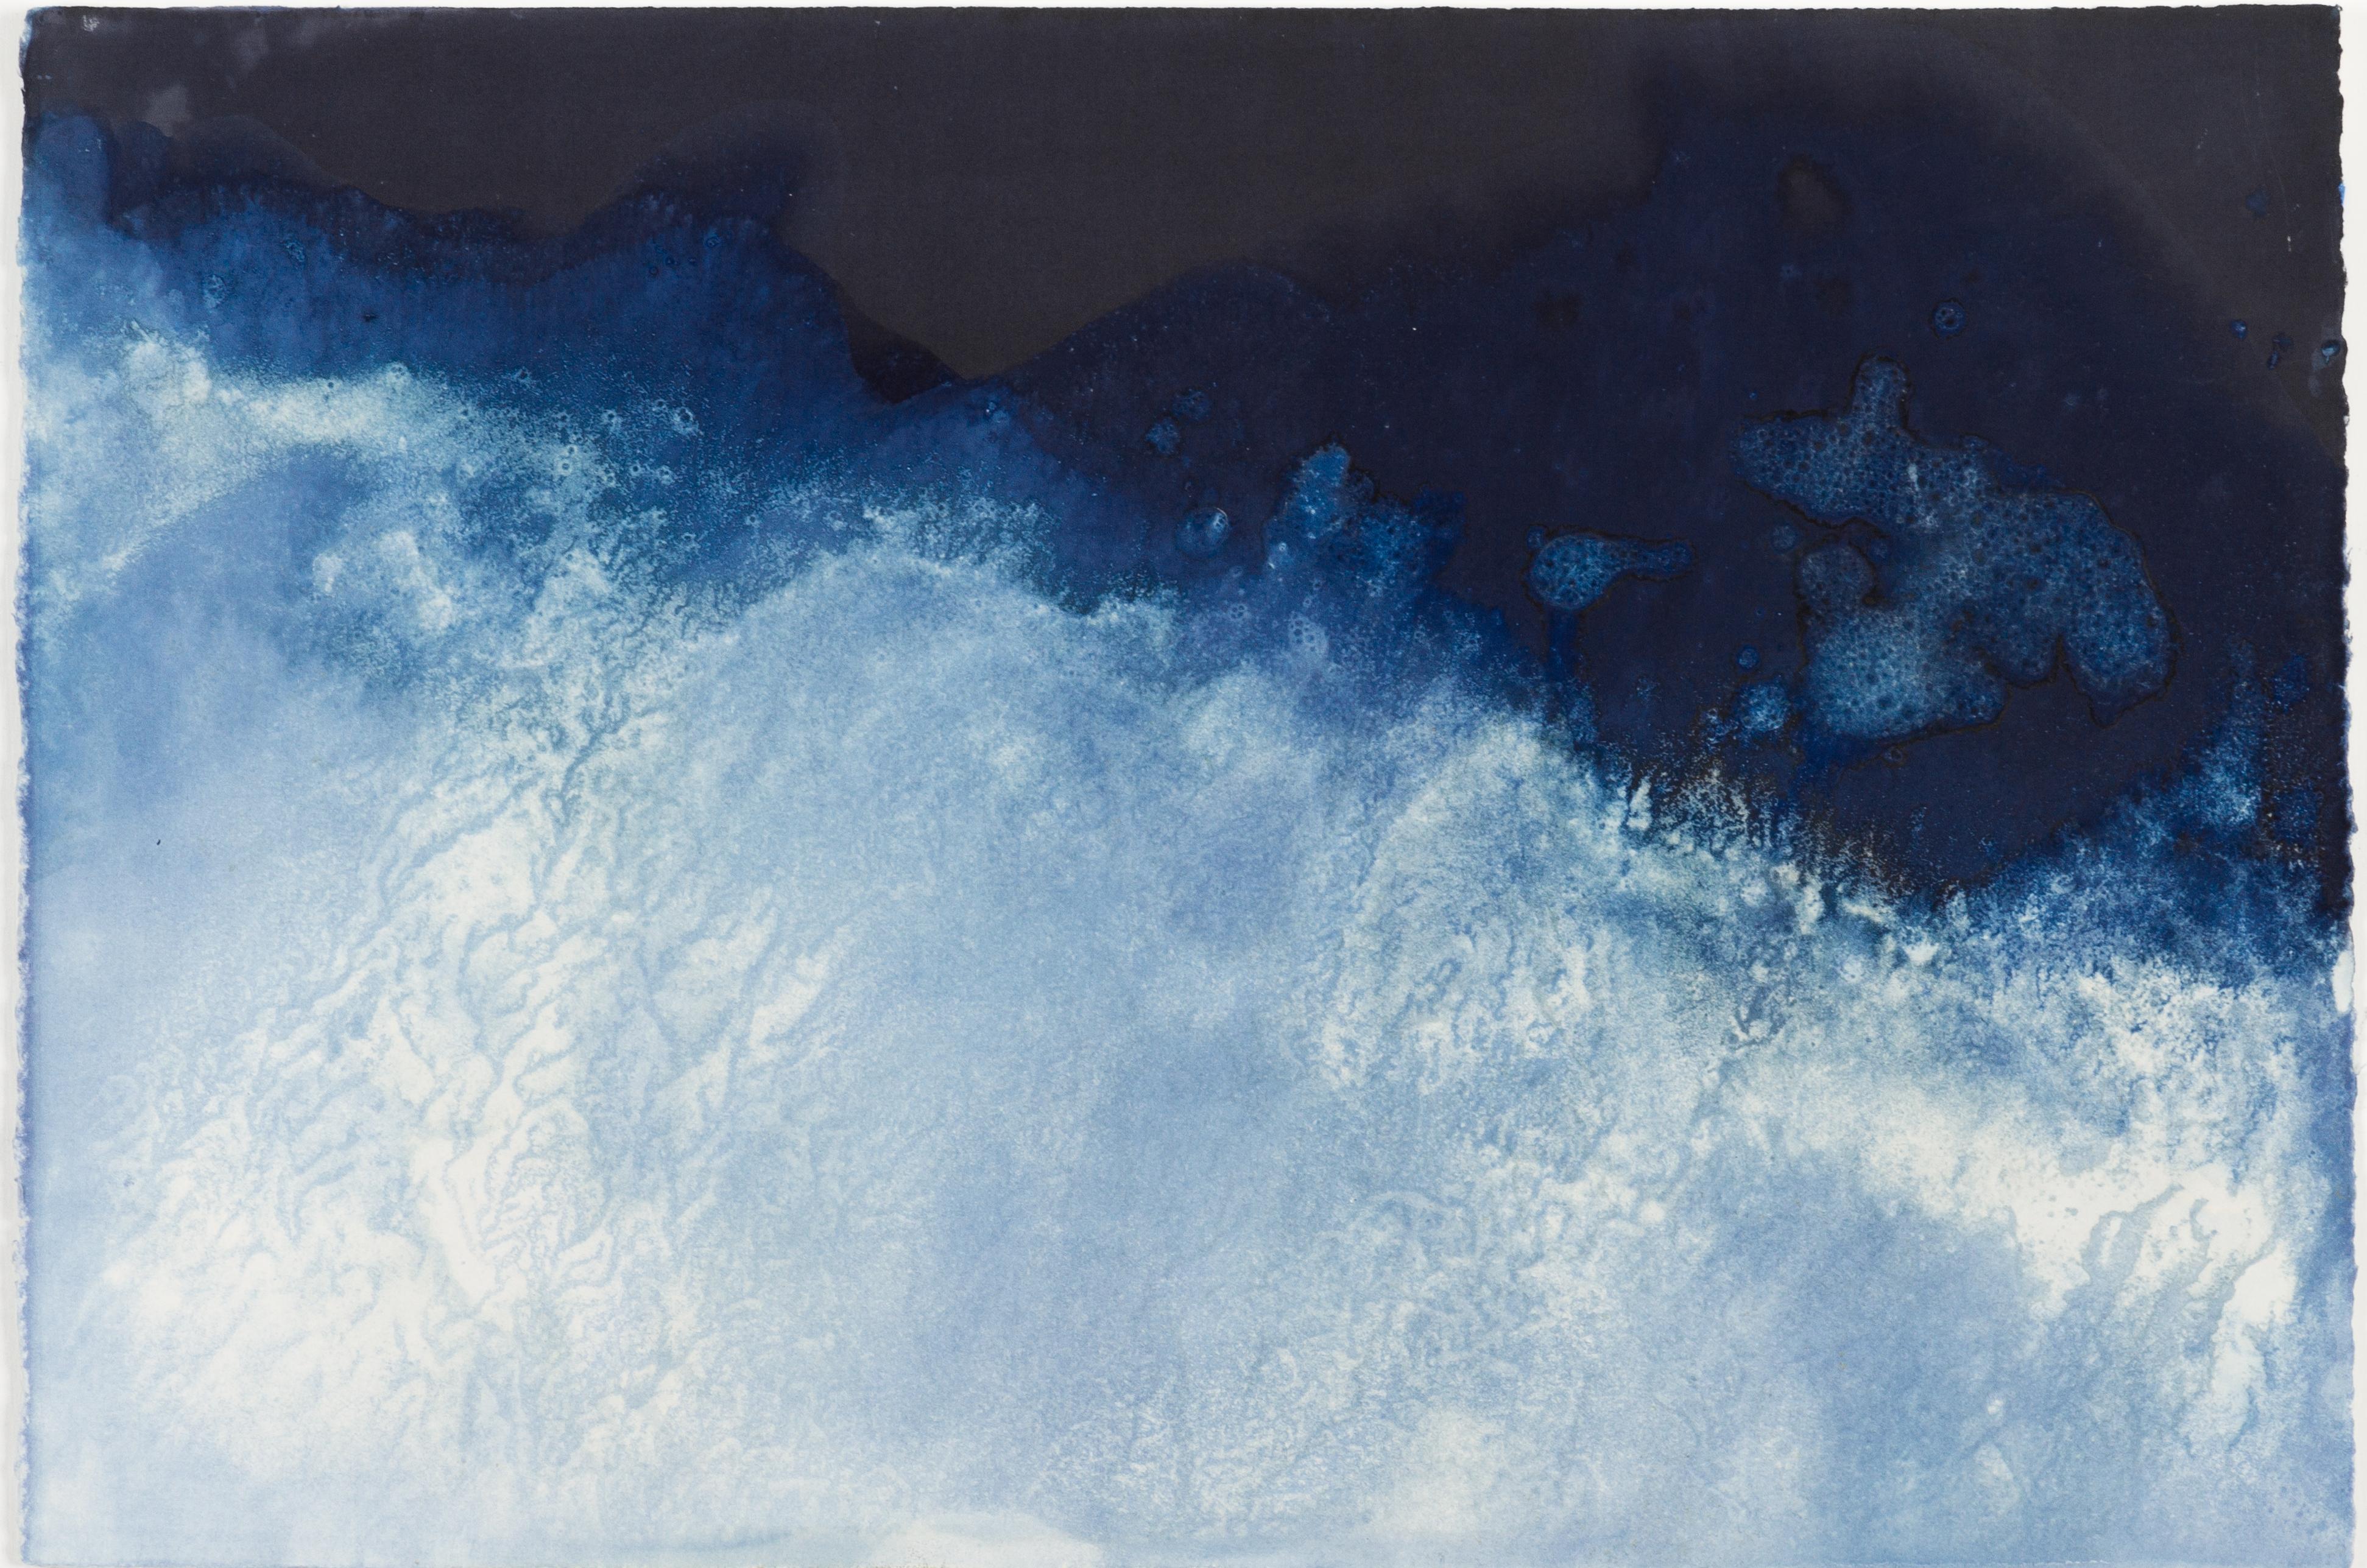 Paola Davila Landscape Photograph - 27° 42' 26.32'' N7° 42' 26.32'' W-4. Cyanotype photograph of the ocean waves